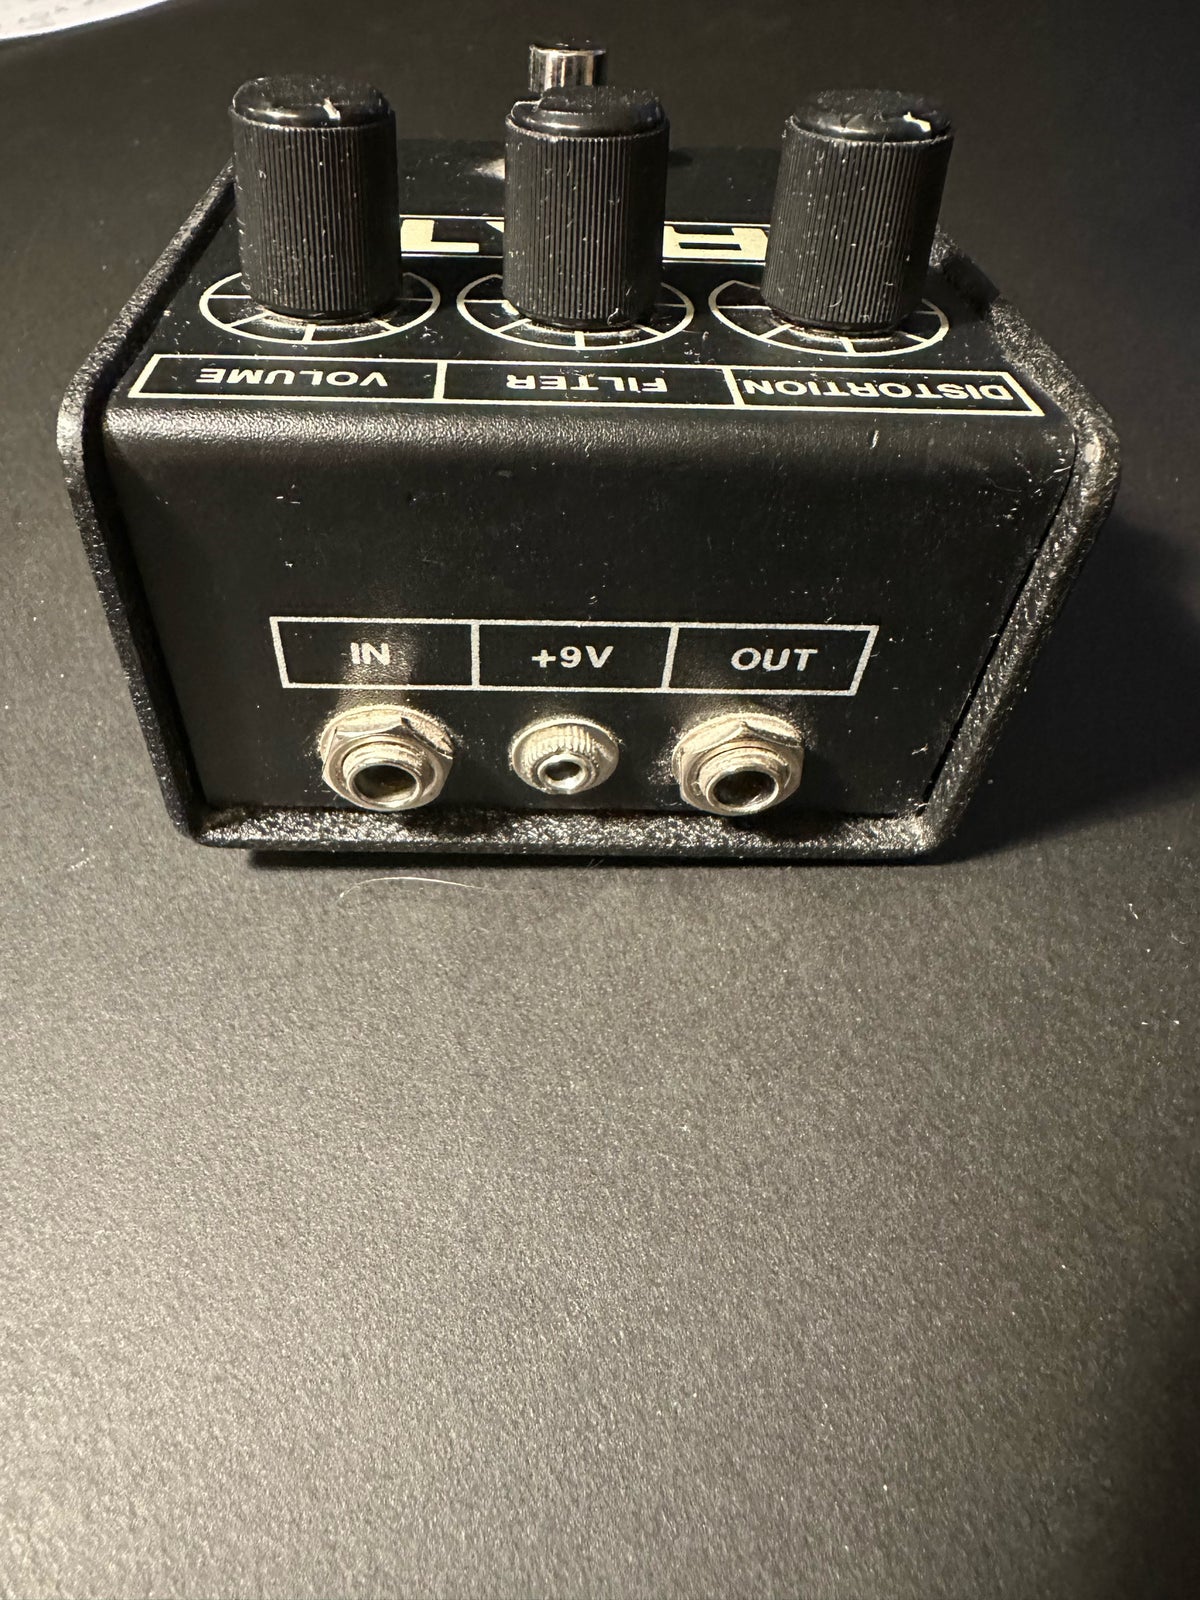 Distortion pedal, Pro Co RAT 2